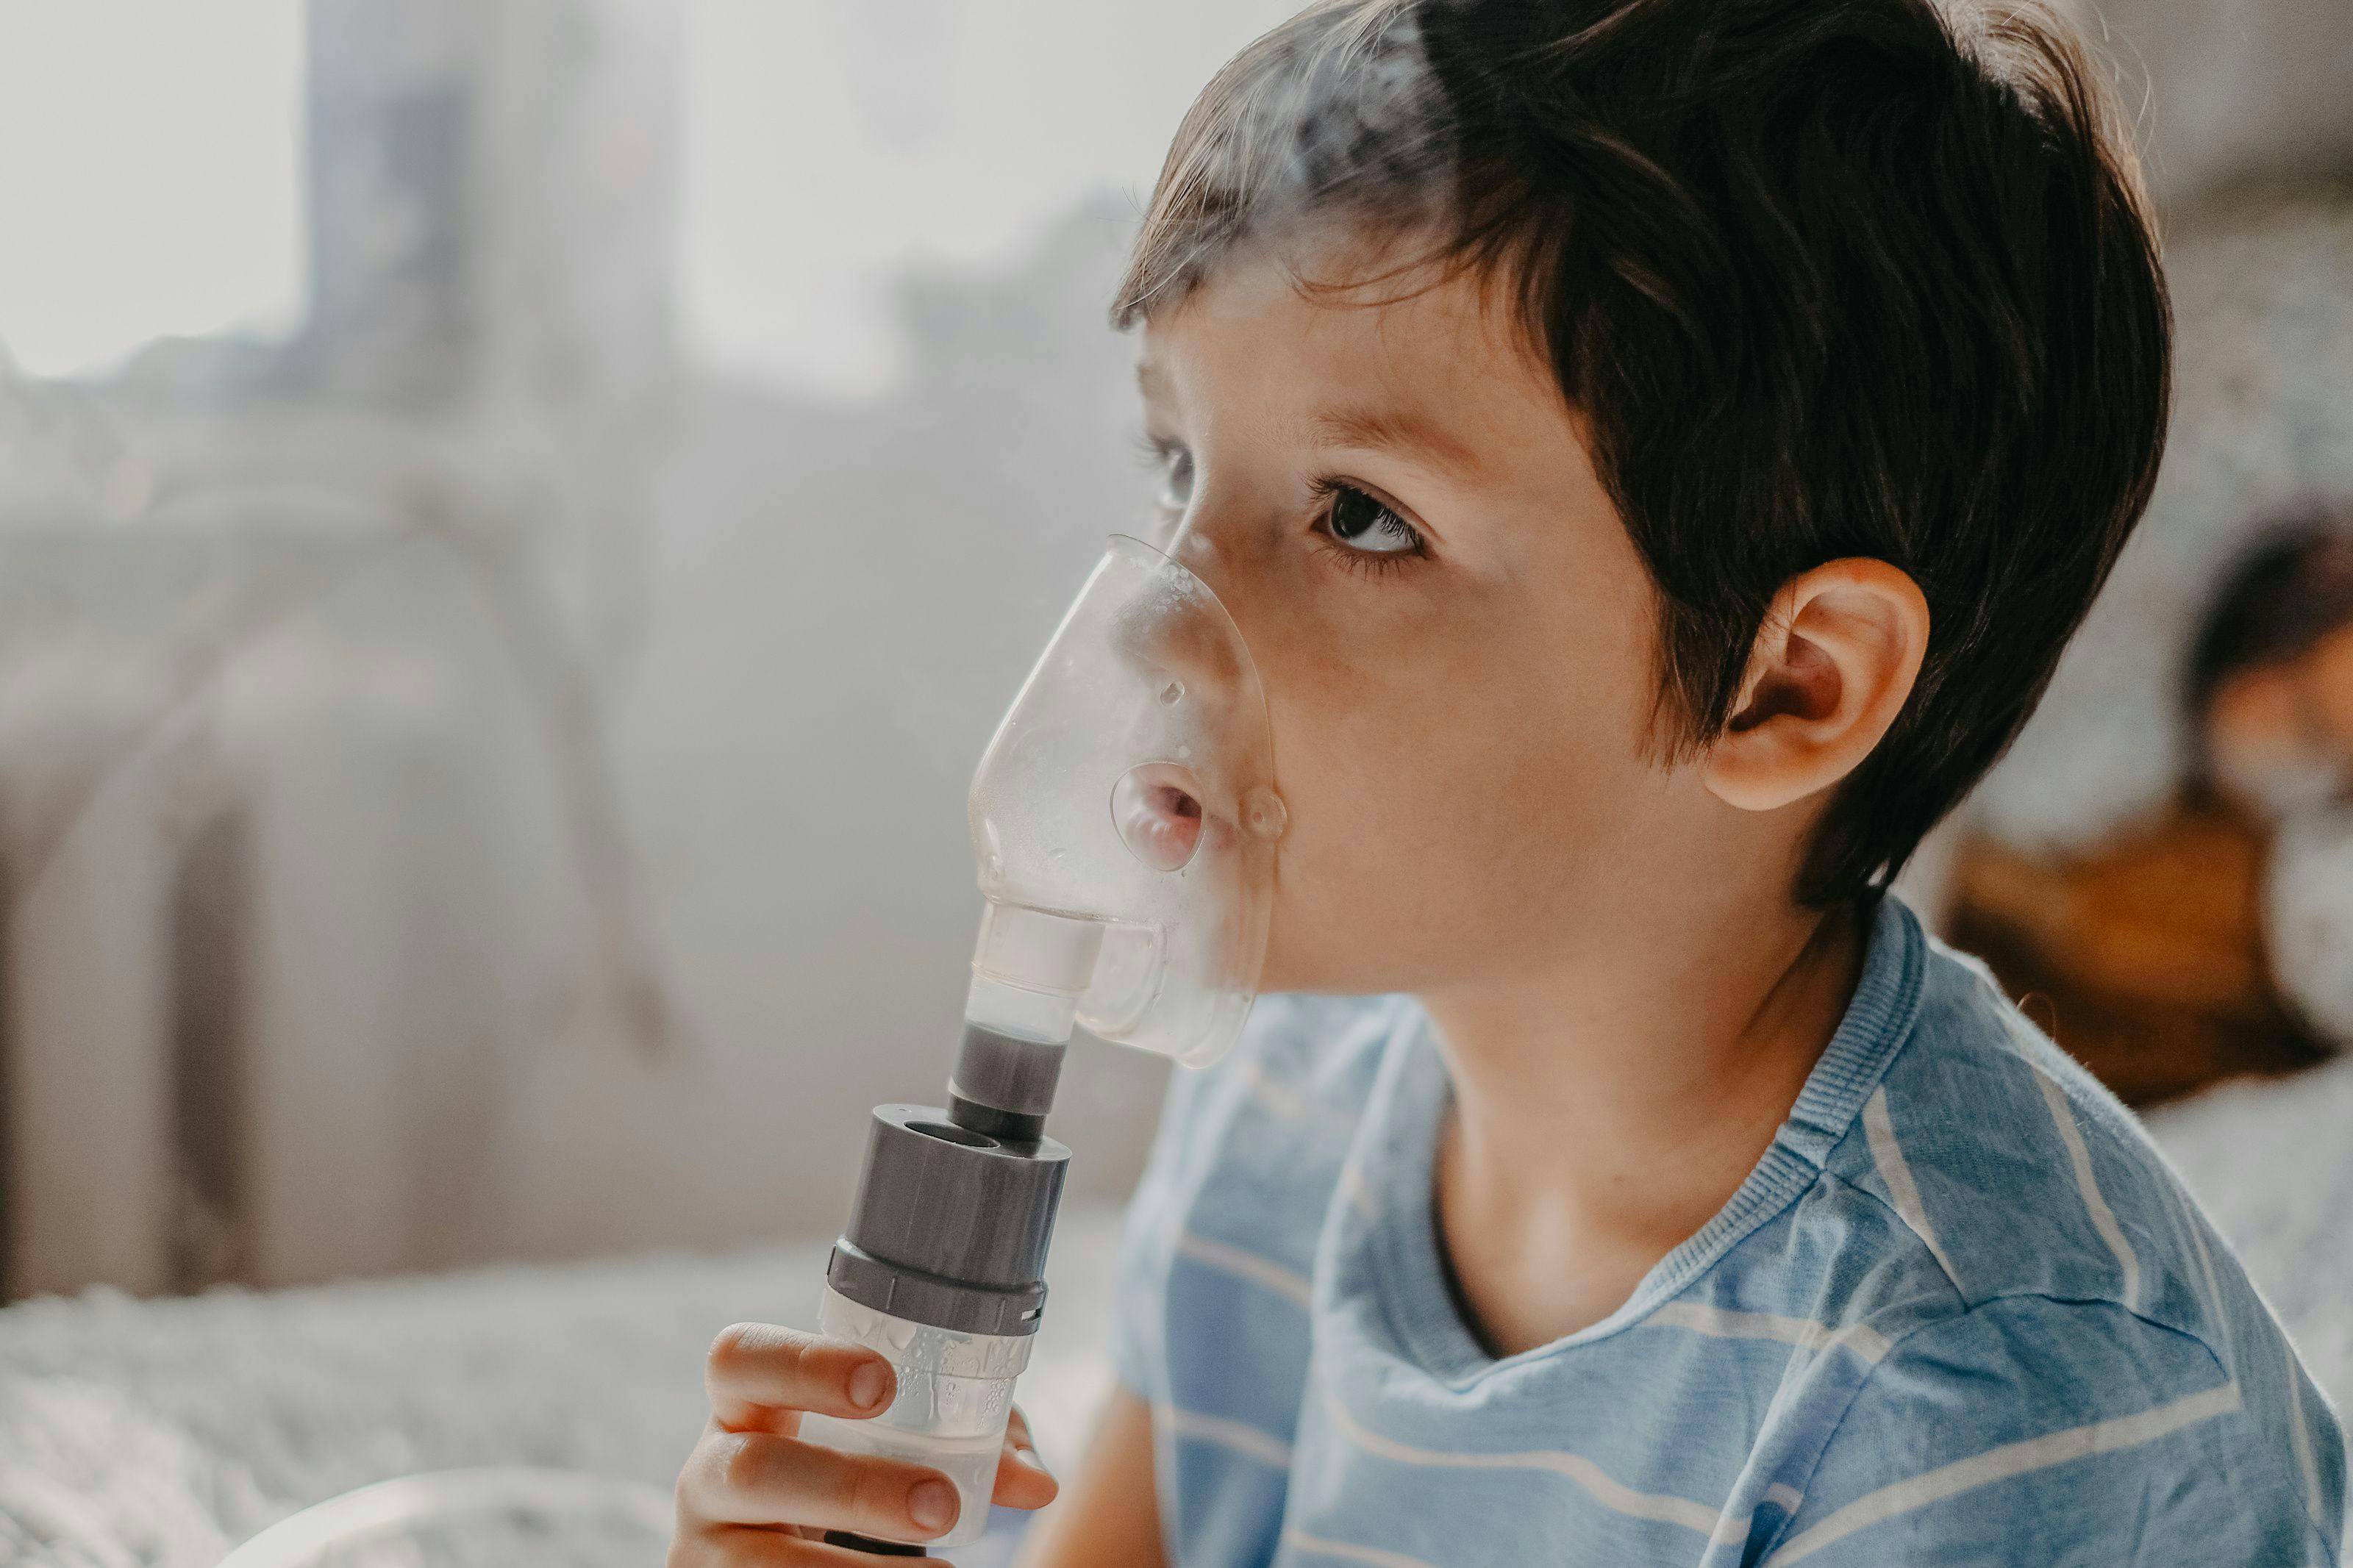 Indirect airway hyperresponsiveness test shows promise in optimizing asthma treatment for children | Image Credit: © sushytska - © sushytska - stock.adobe.com.